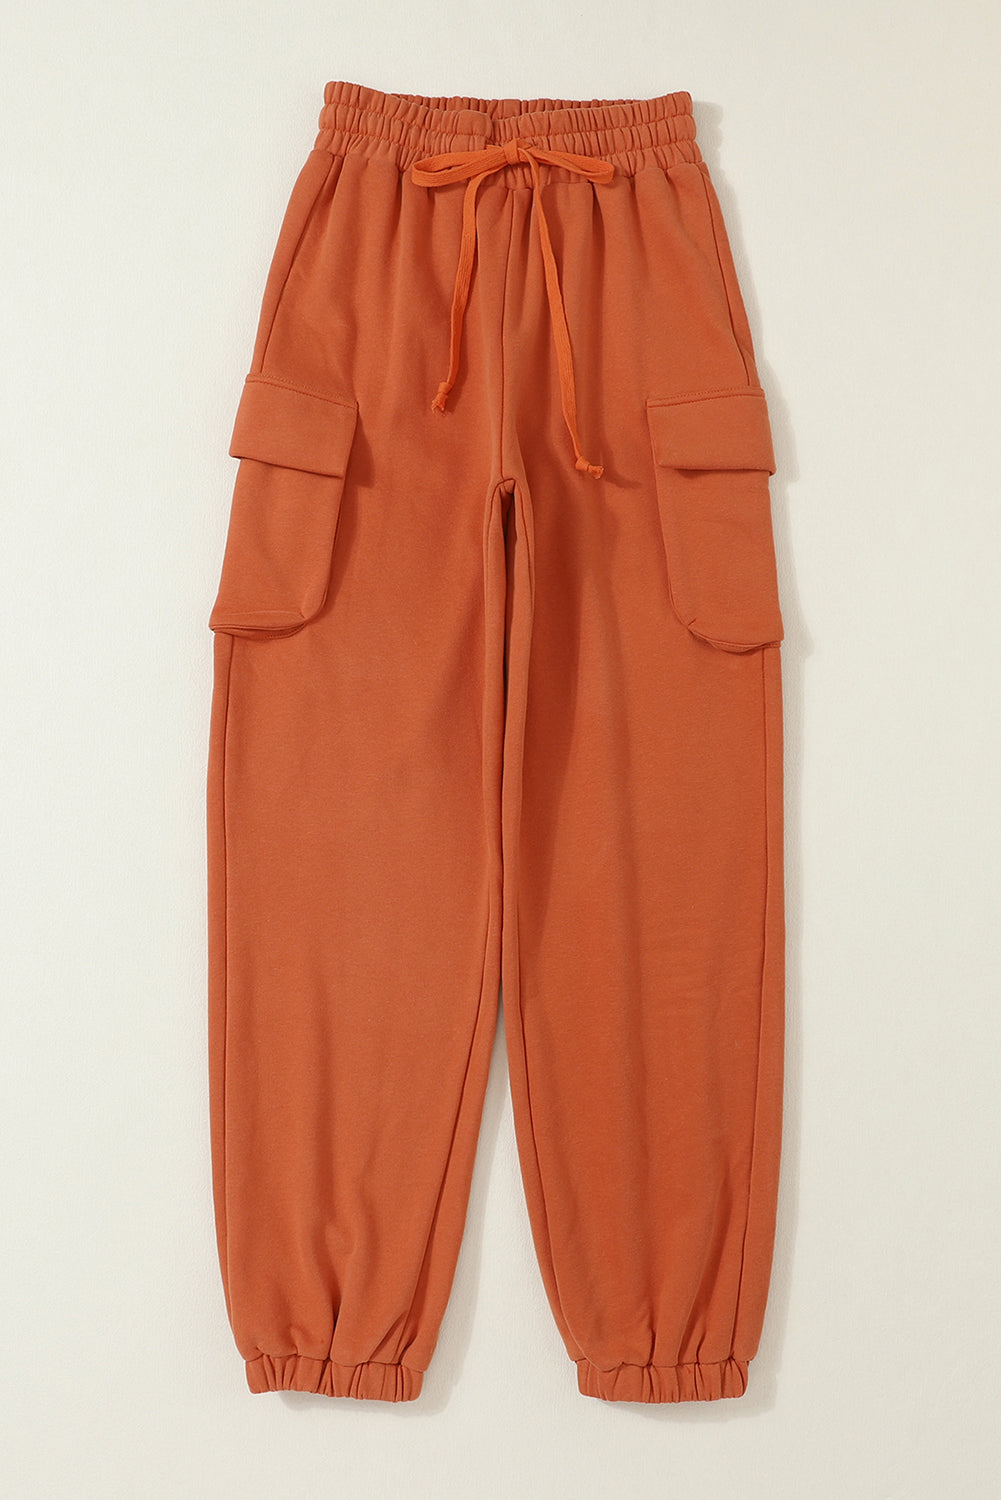 Orange Drawstring Cargo Pockets Jogger Pants - Dixie Hike & Style